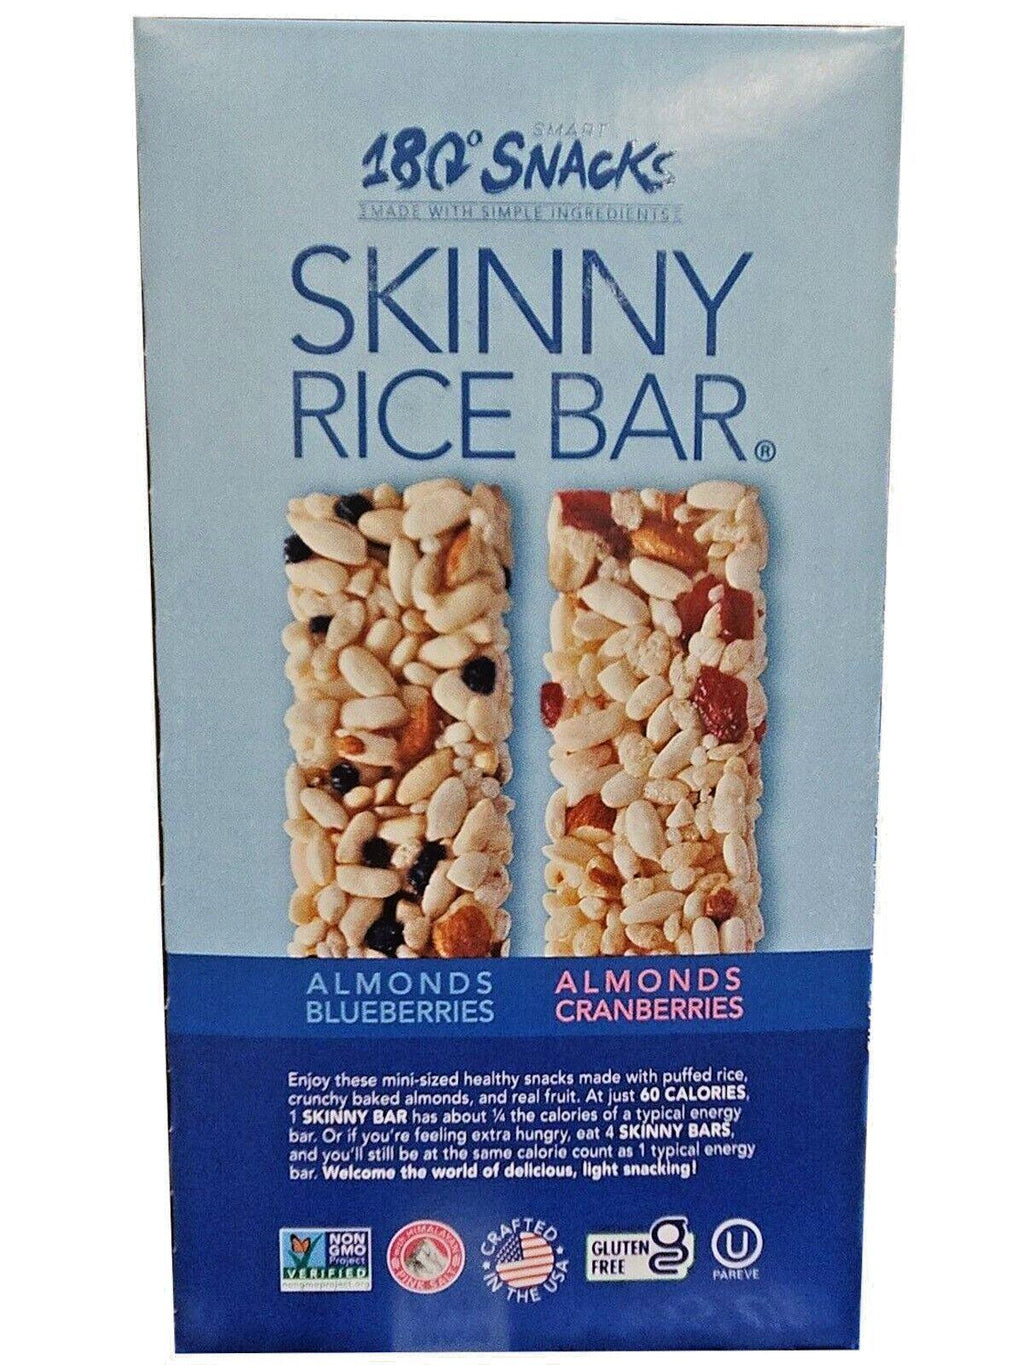 Skinny rice bar